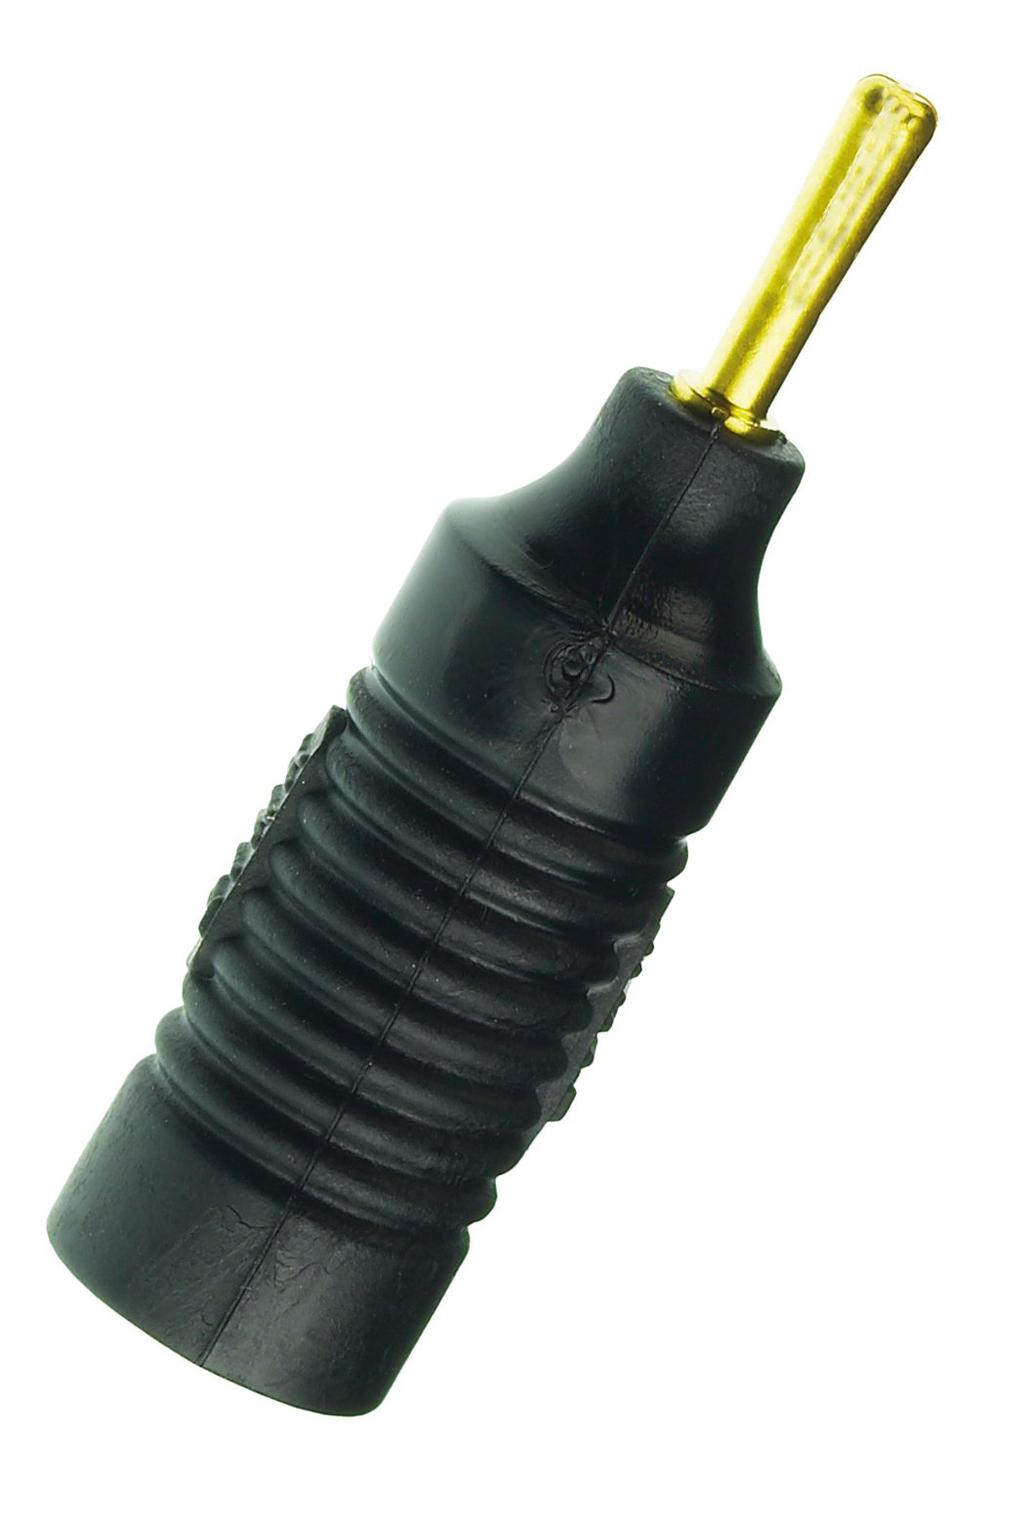 10.2 Optional accessories Qty. Order no. Description 1 6.2103.140 Adapter black 2 mm plug / B socket 4 mm For connecting plug B (4 mm) to 2 mm socket. 1 6.2122.